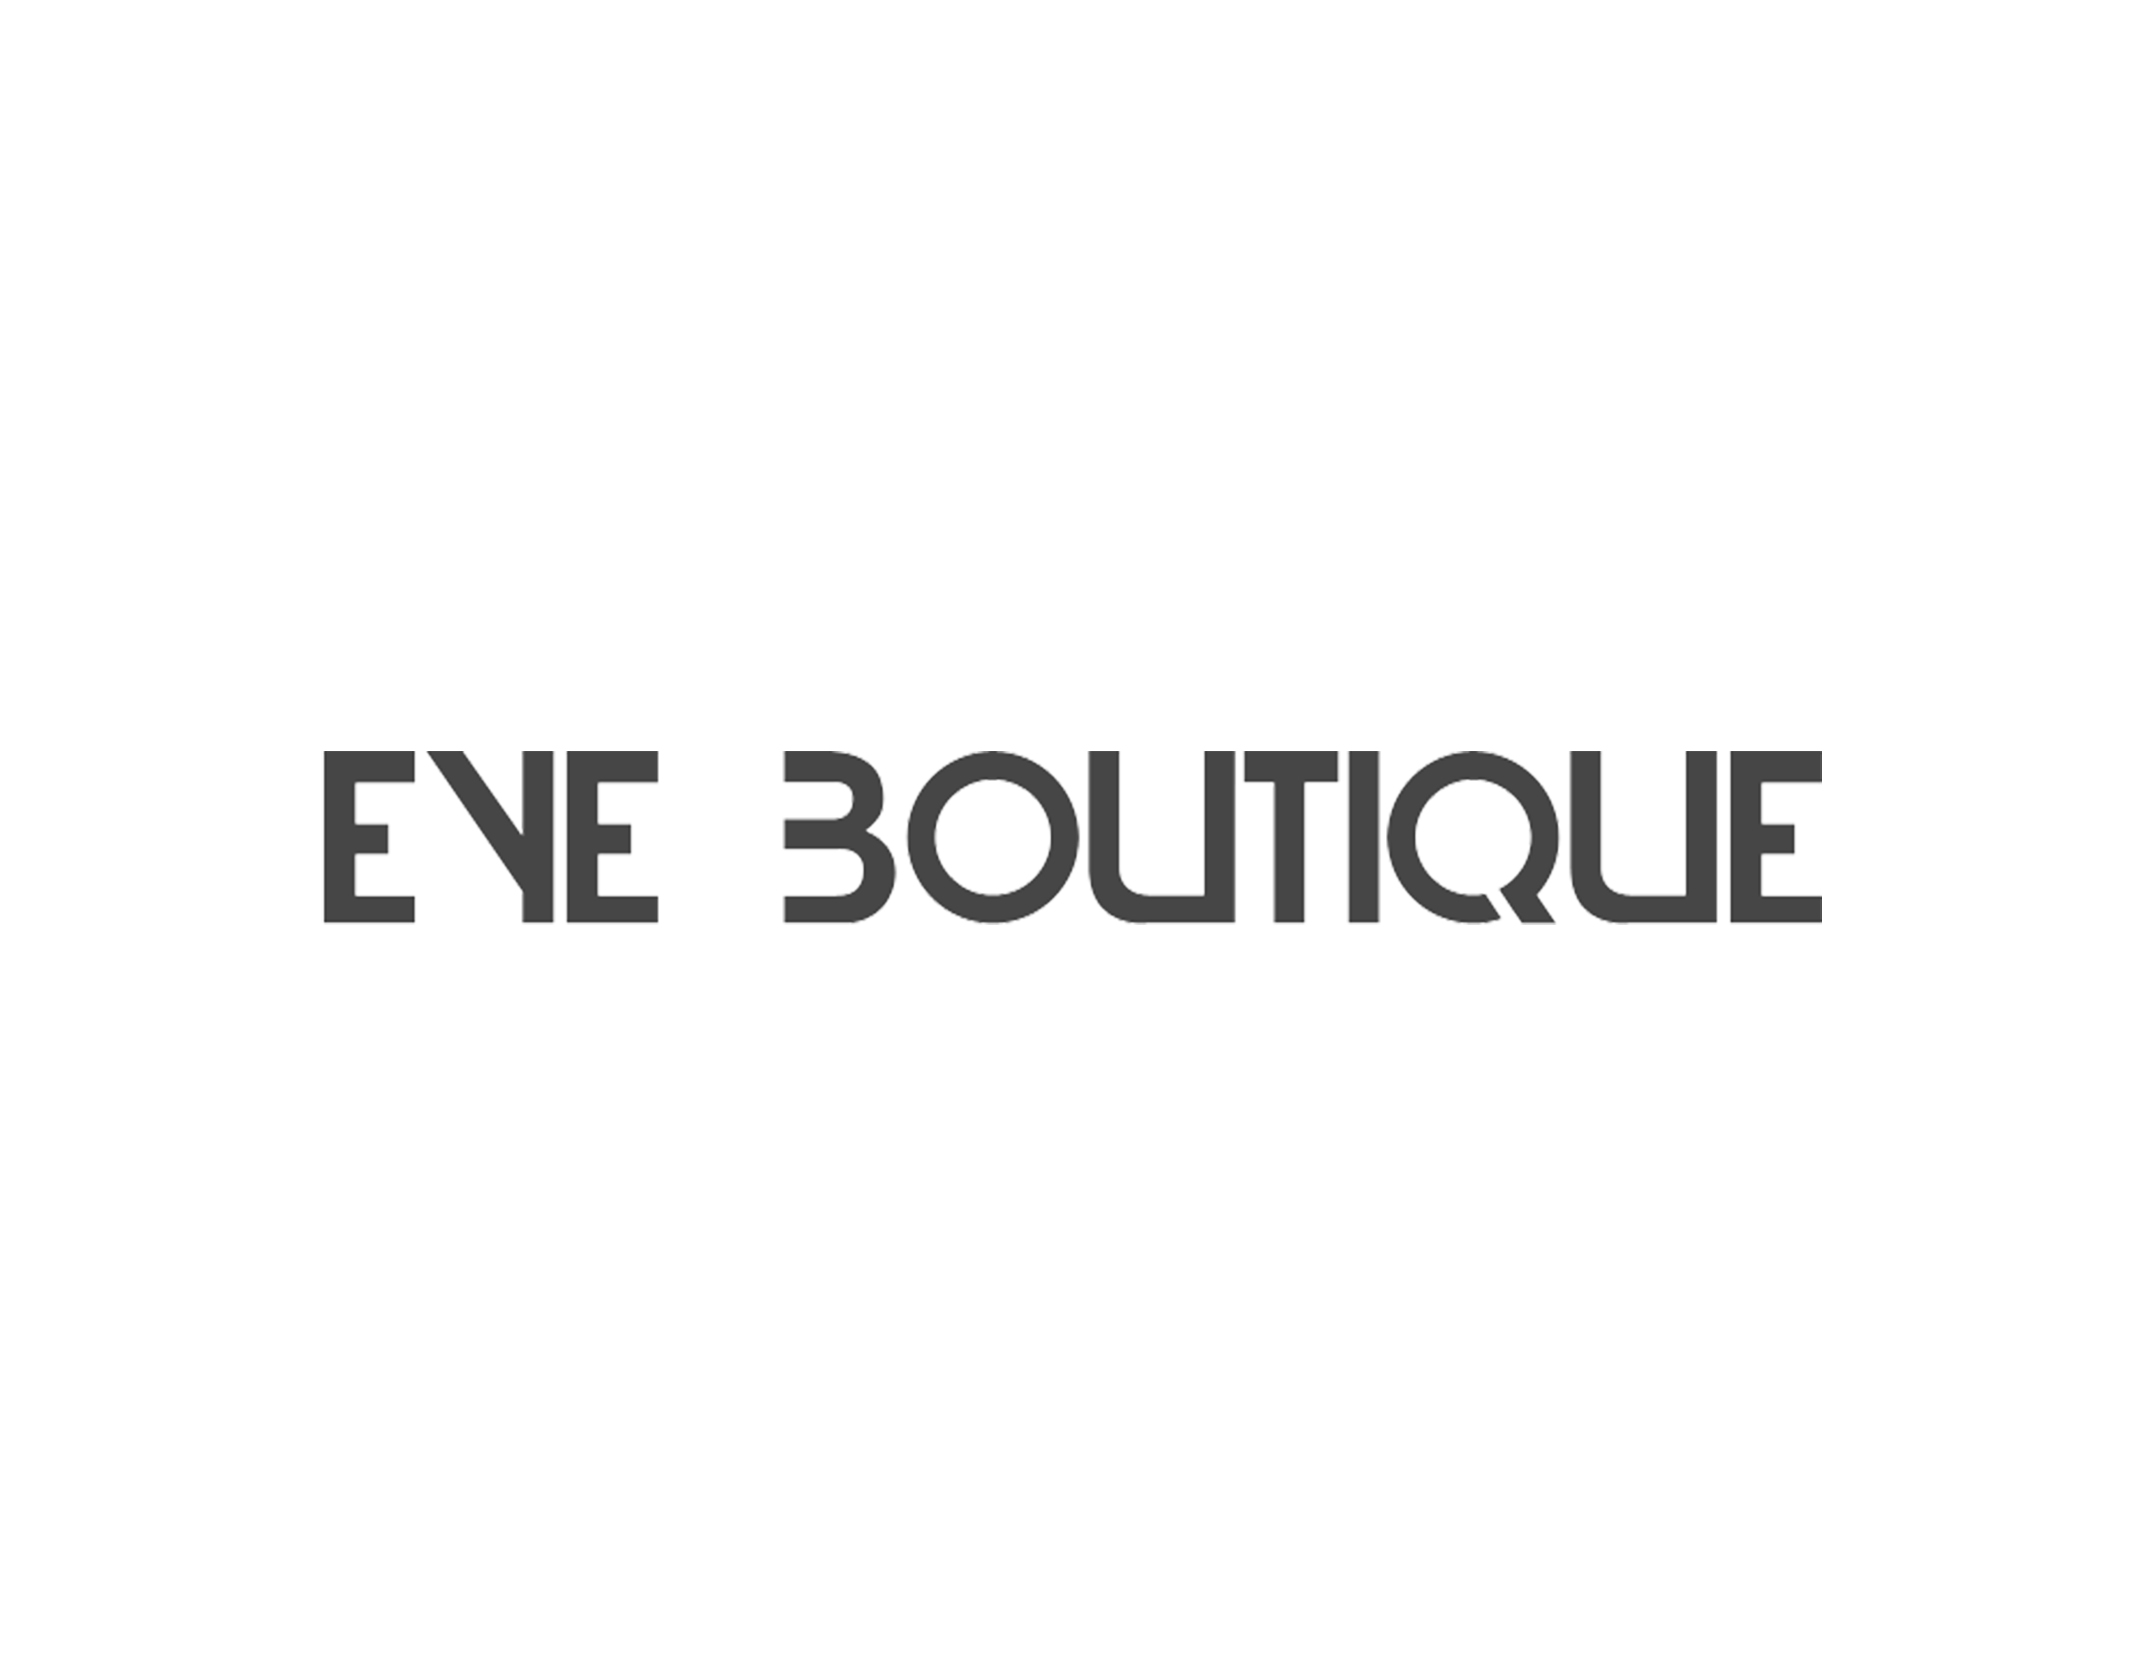 Eye Boutique